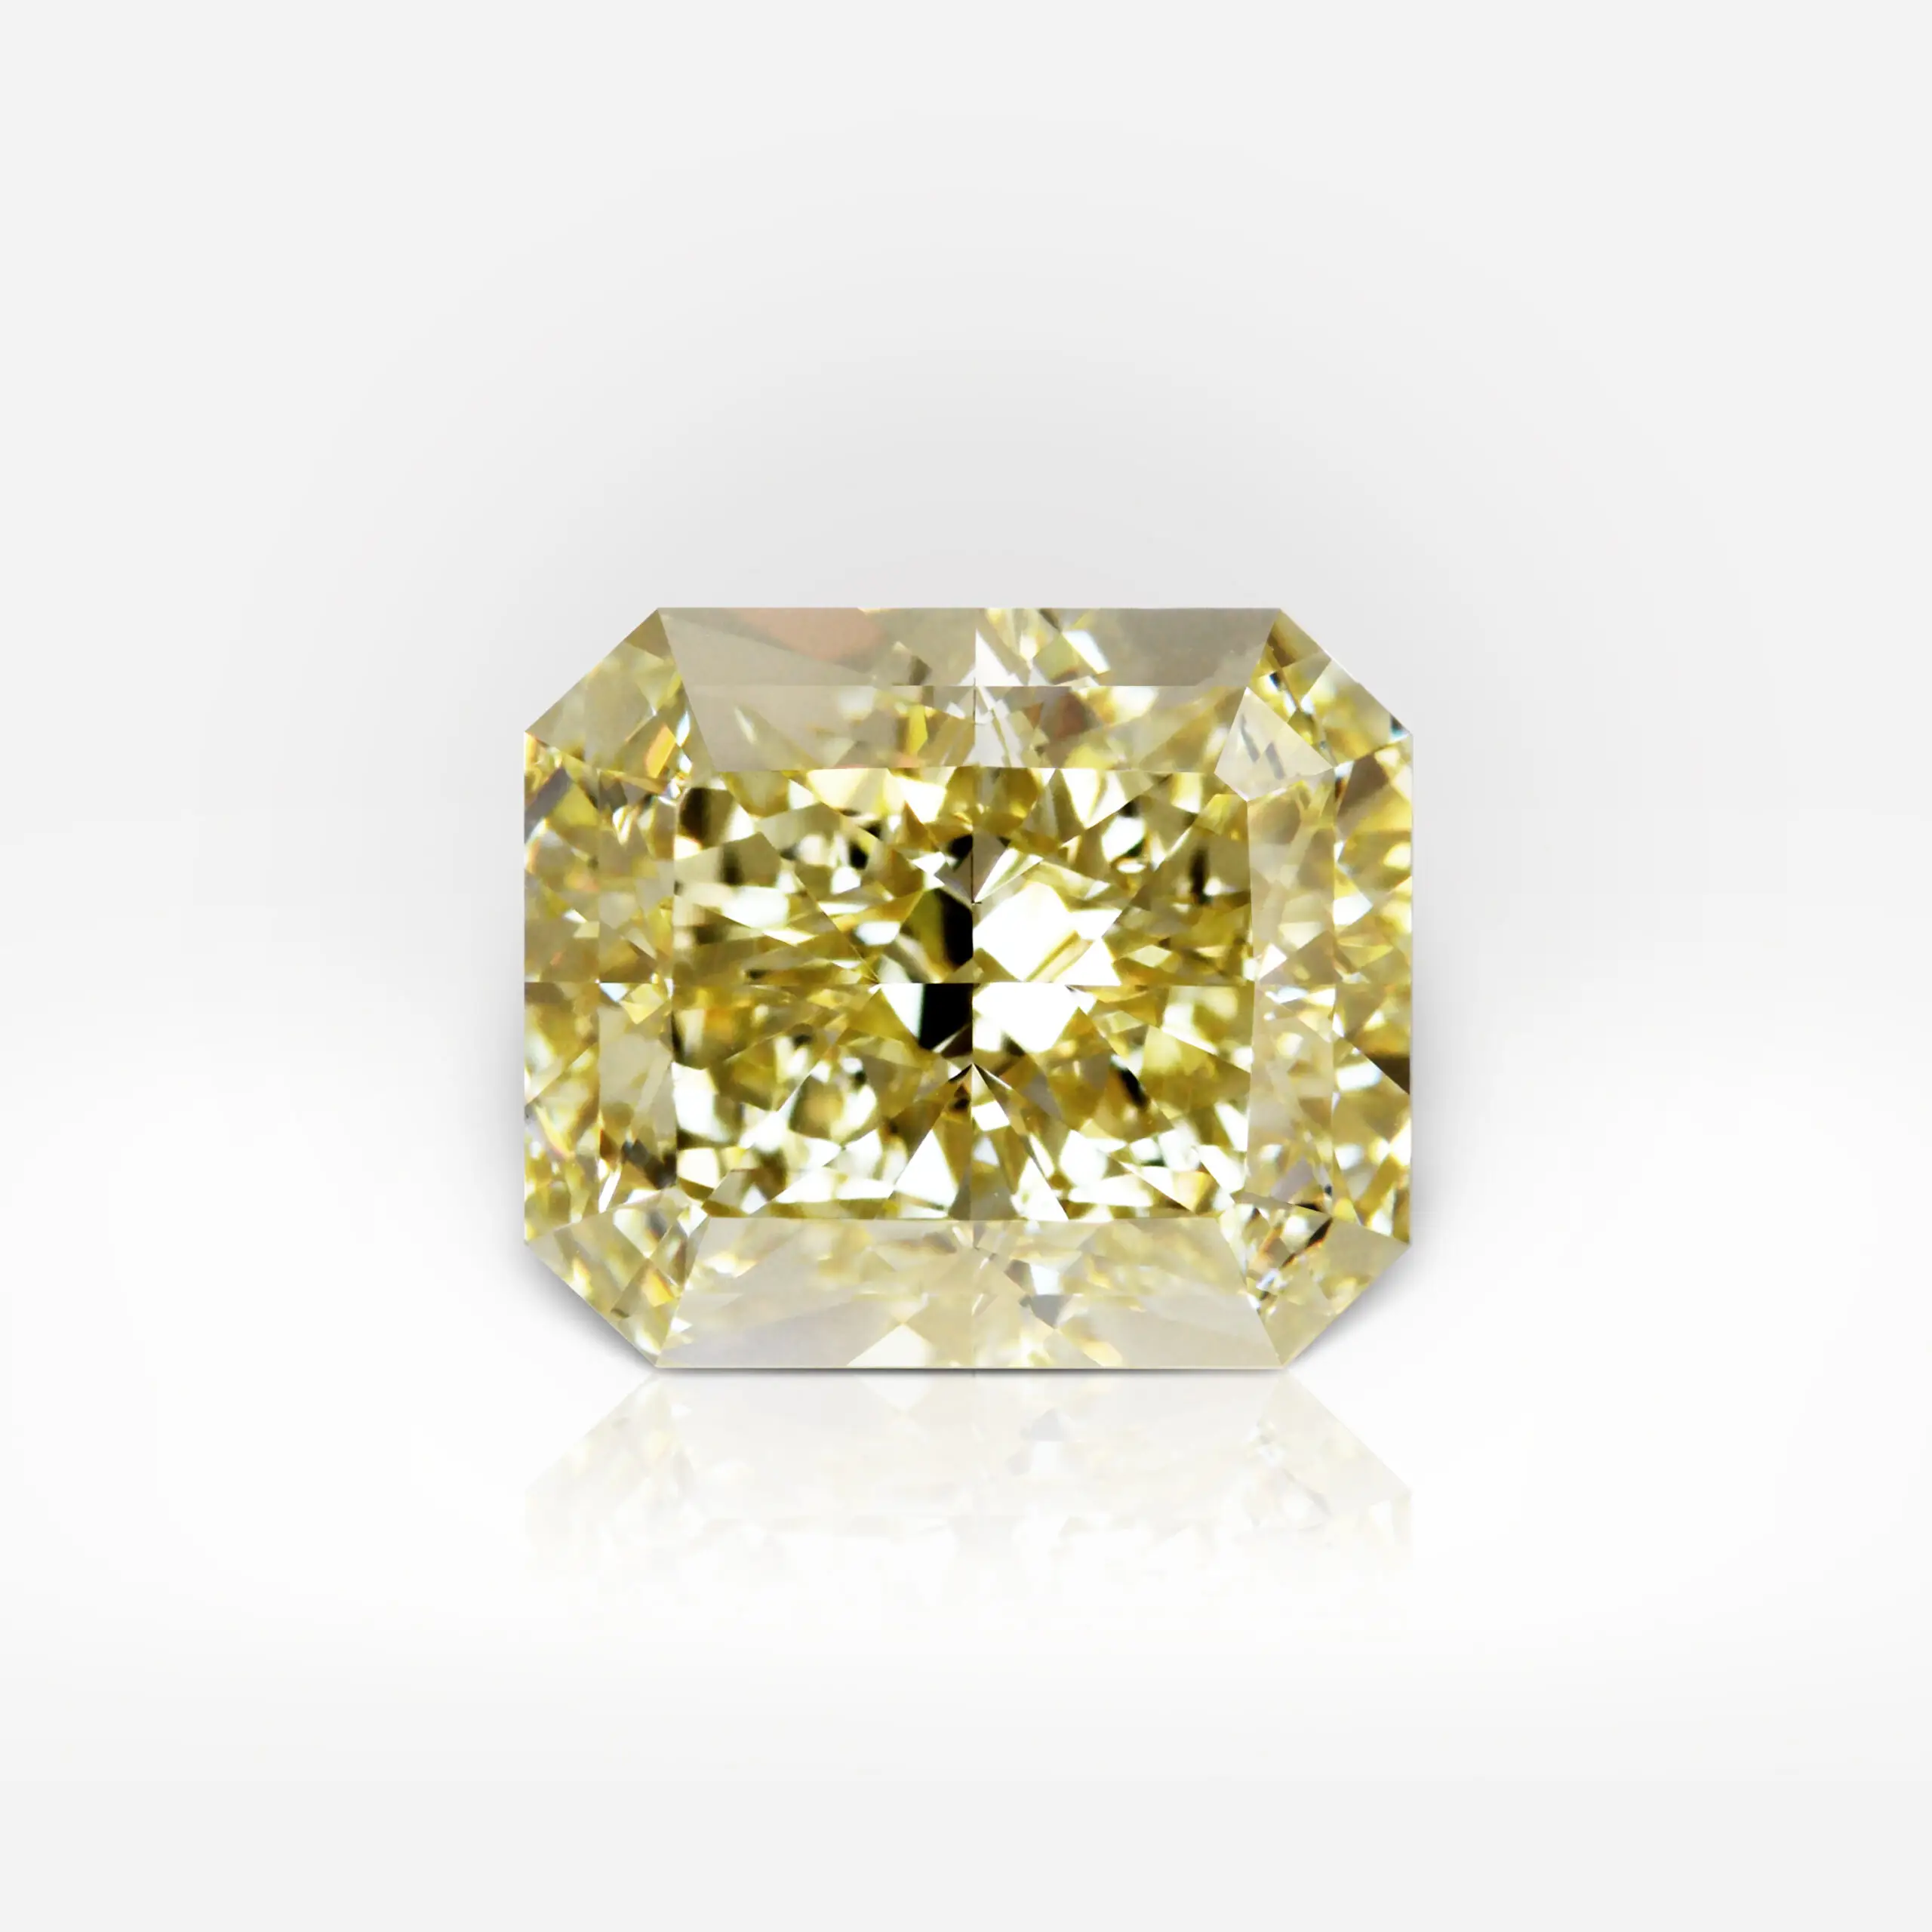 4.69 carat Fancy Yellow FL Radiant Shape Diamond GIA - picture 1